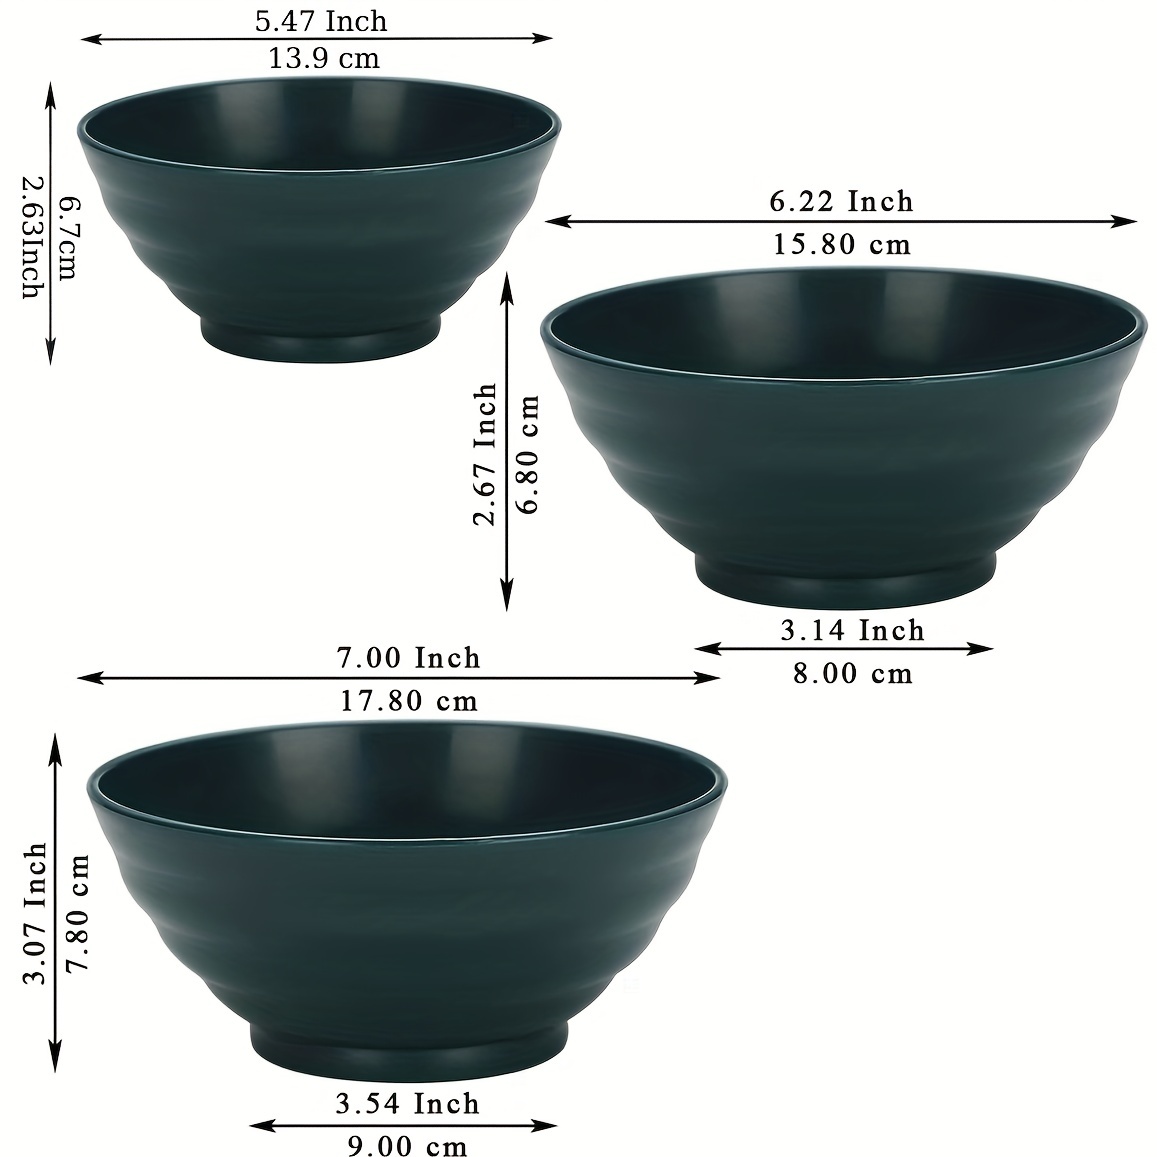 Plastic Bowls Set, 3 Sizes Unbreakable Reusable Light Weight Bowl